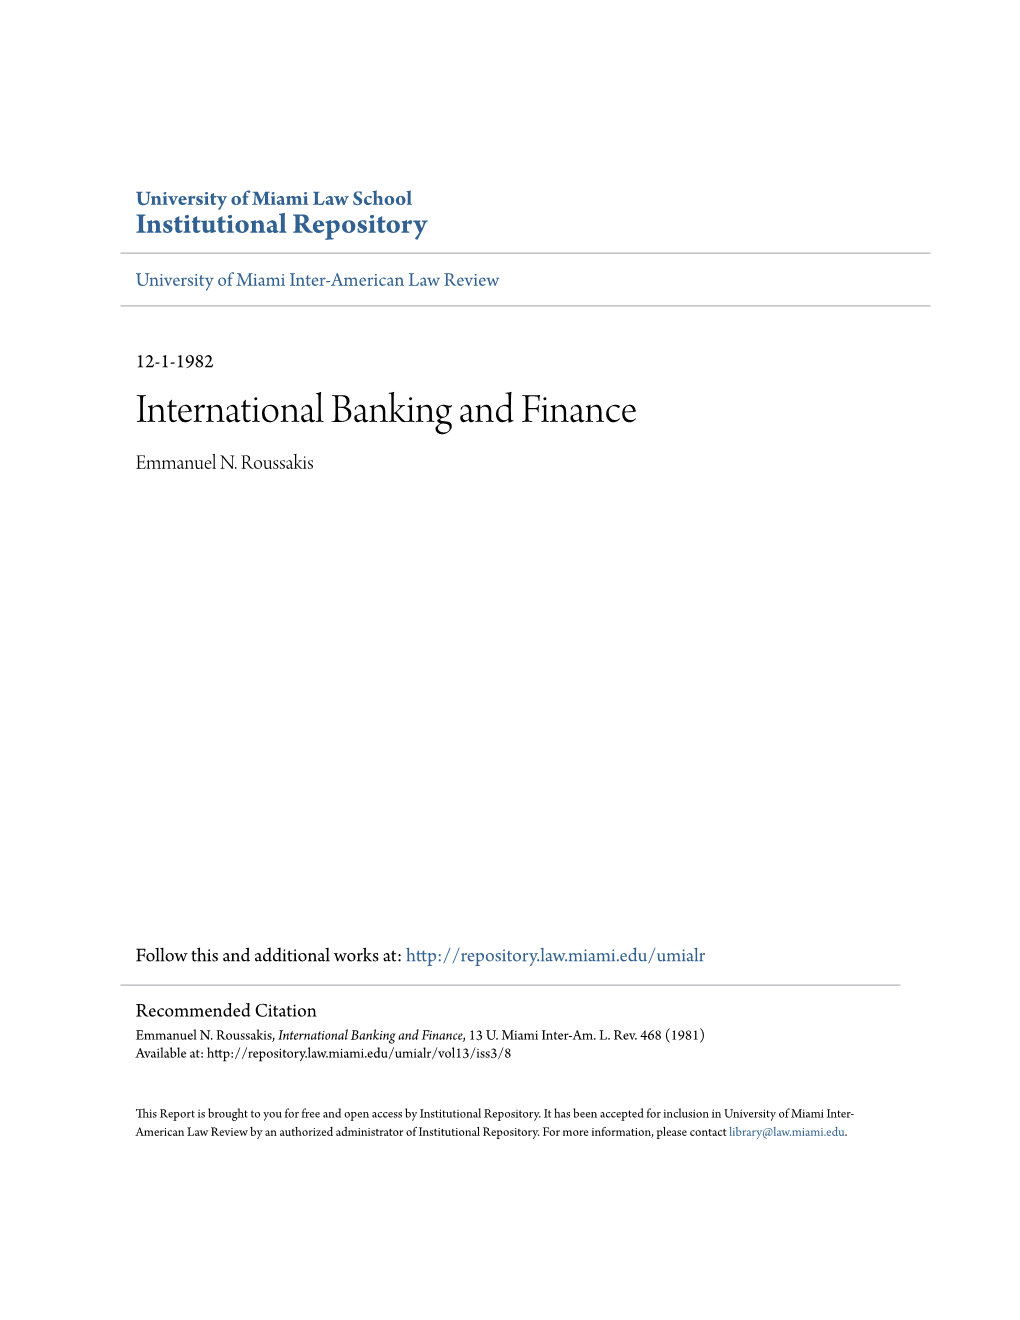 International Banking and Finance Emmanuel N